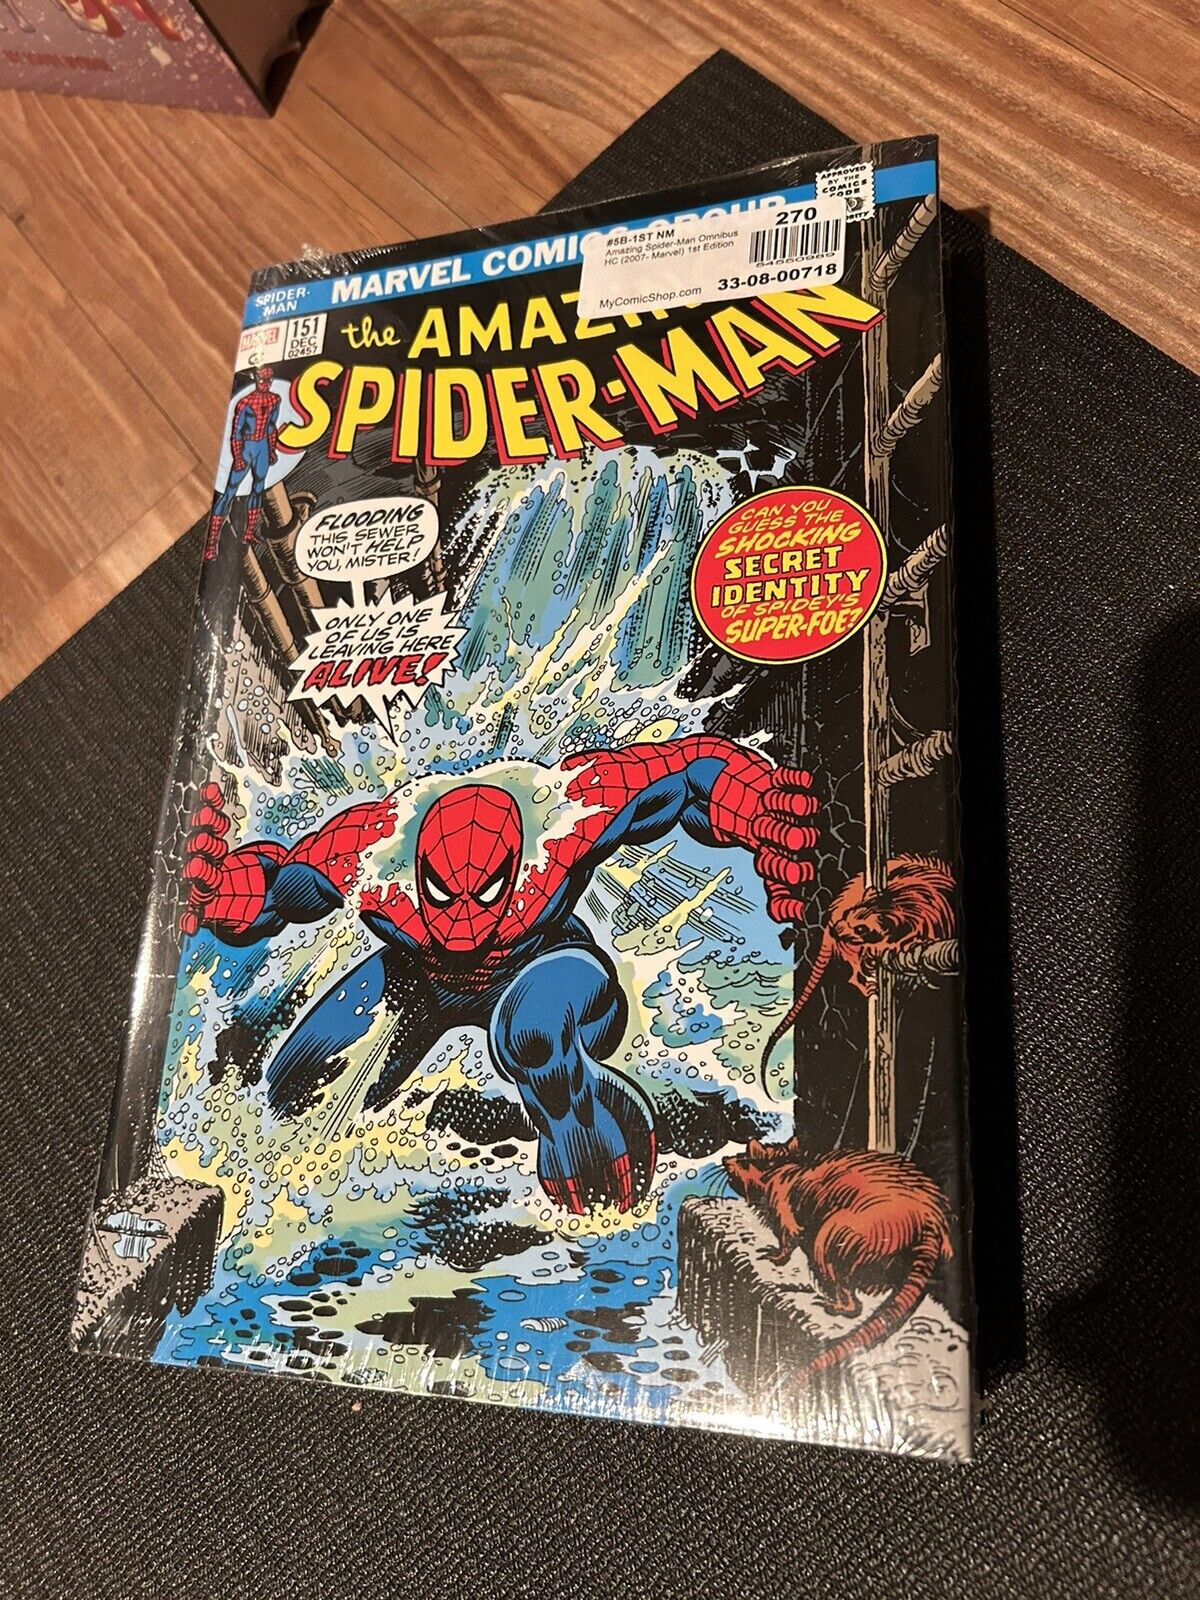 Marvel - Amazing Spider-Man Vol. 5 Omnibus, New/Sealed, Kane DM Variant Cover